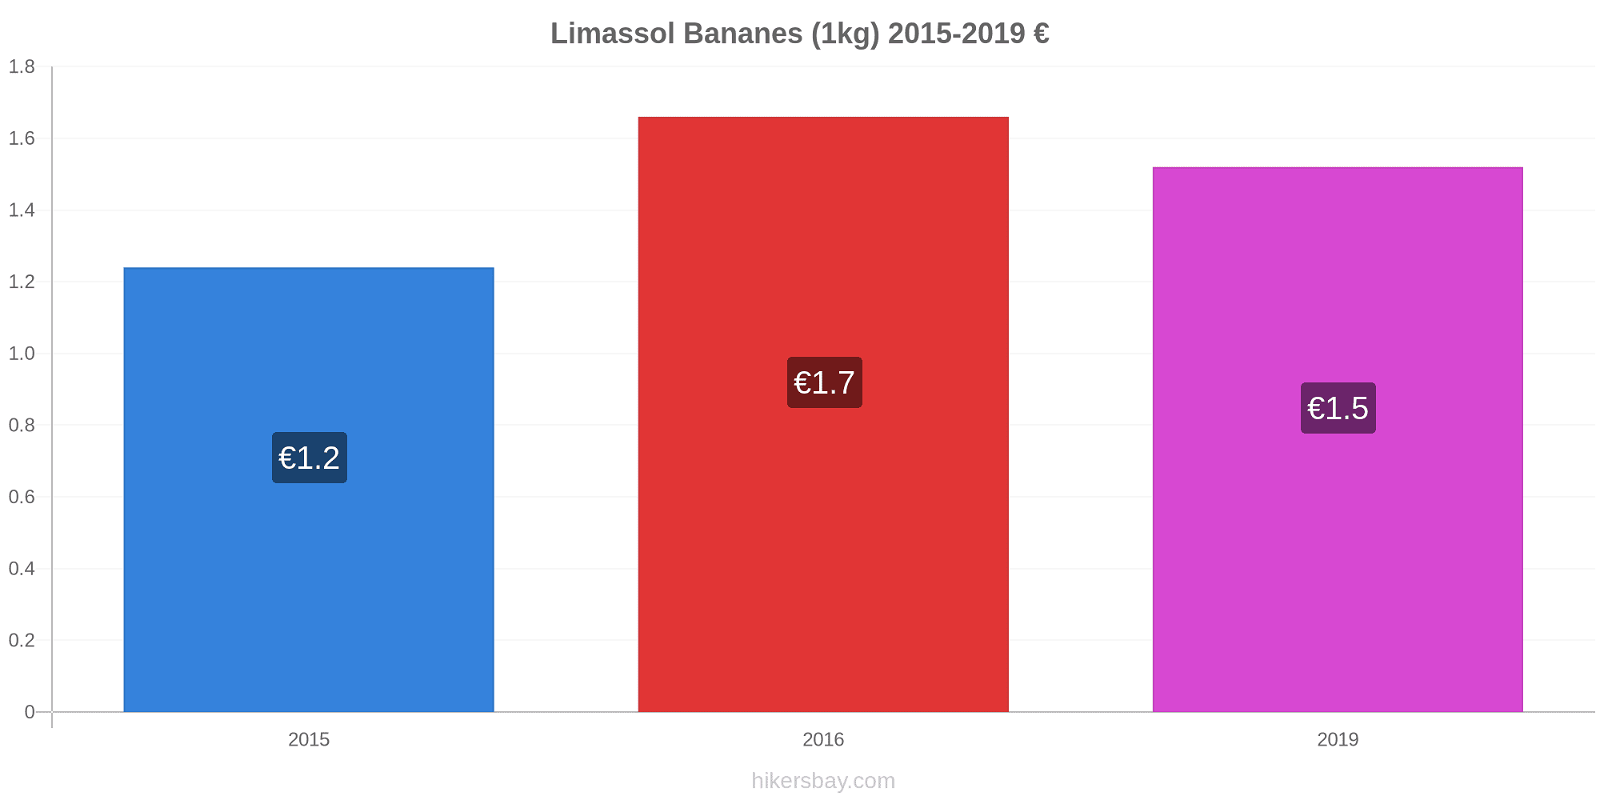 Limassol changements de prix Bananes (1kg) hikersbay.com